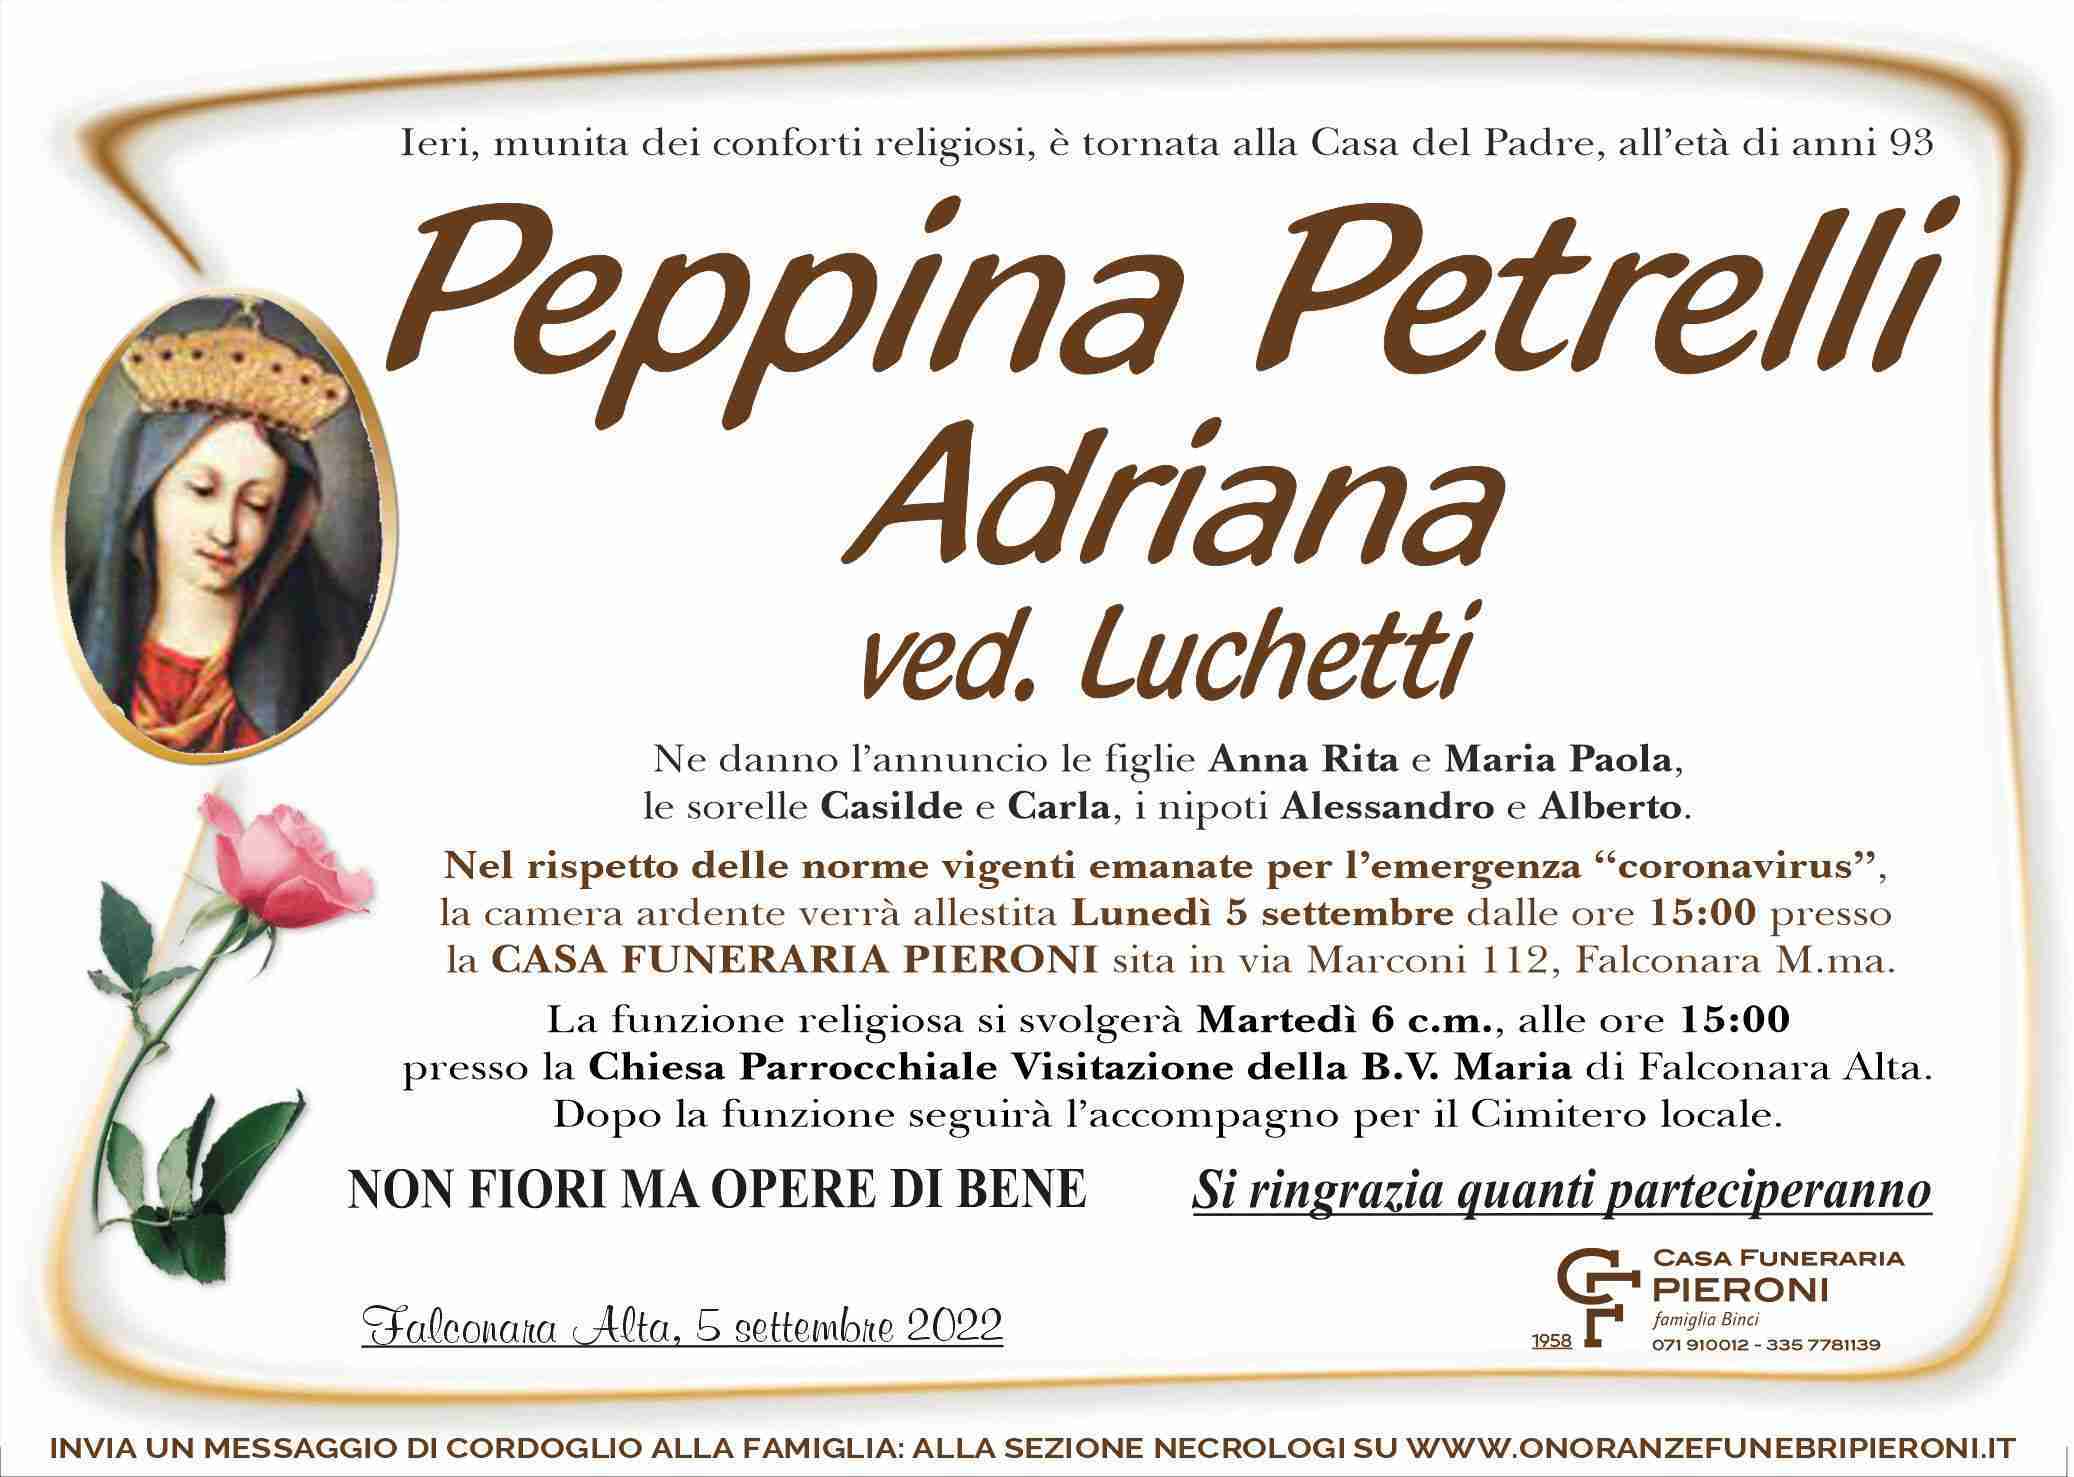 Peppina "Adriana" Petrelli